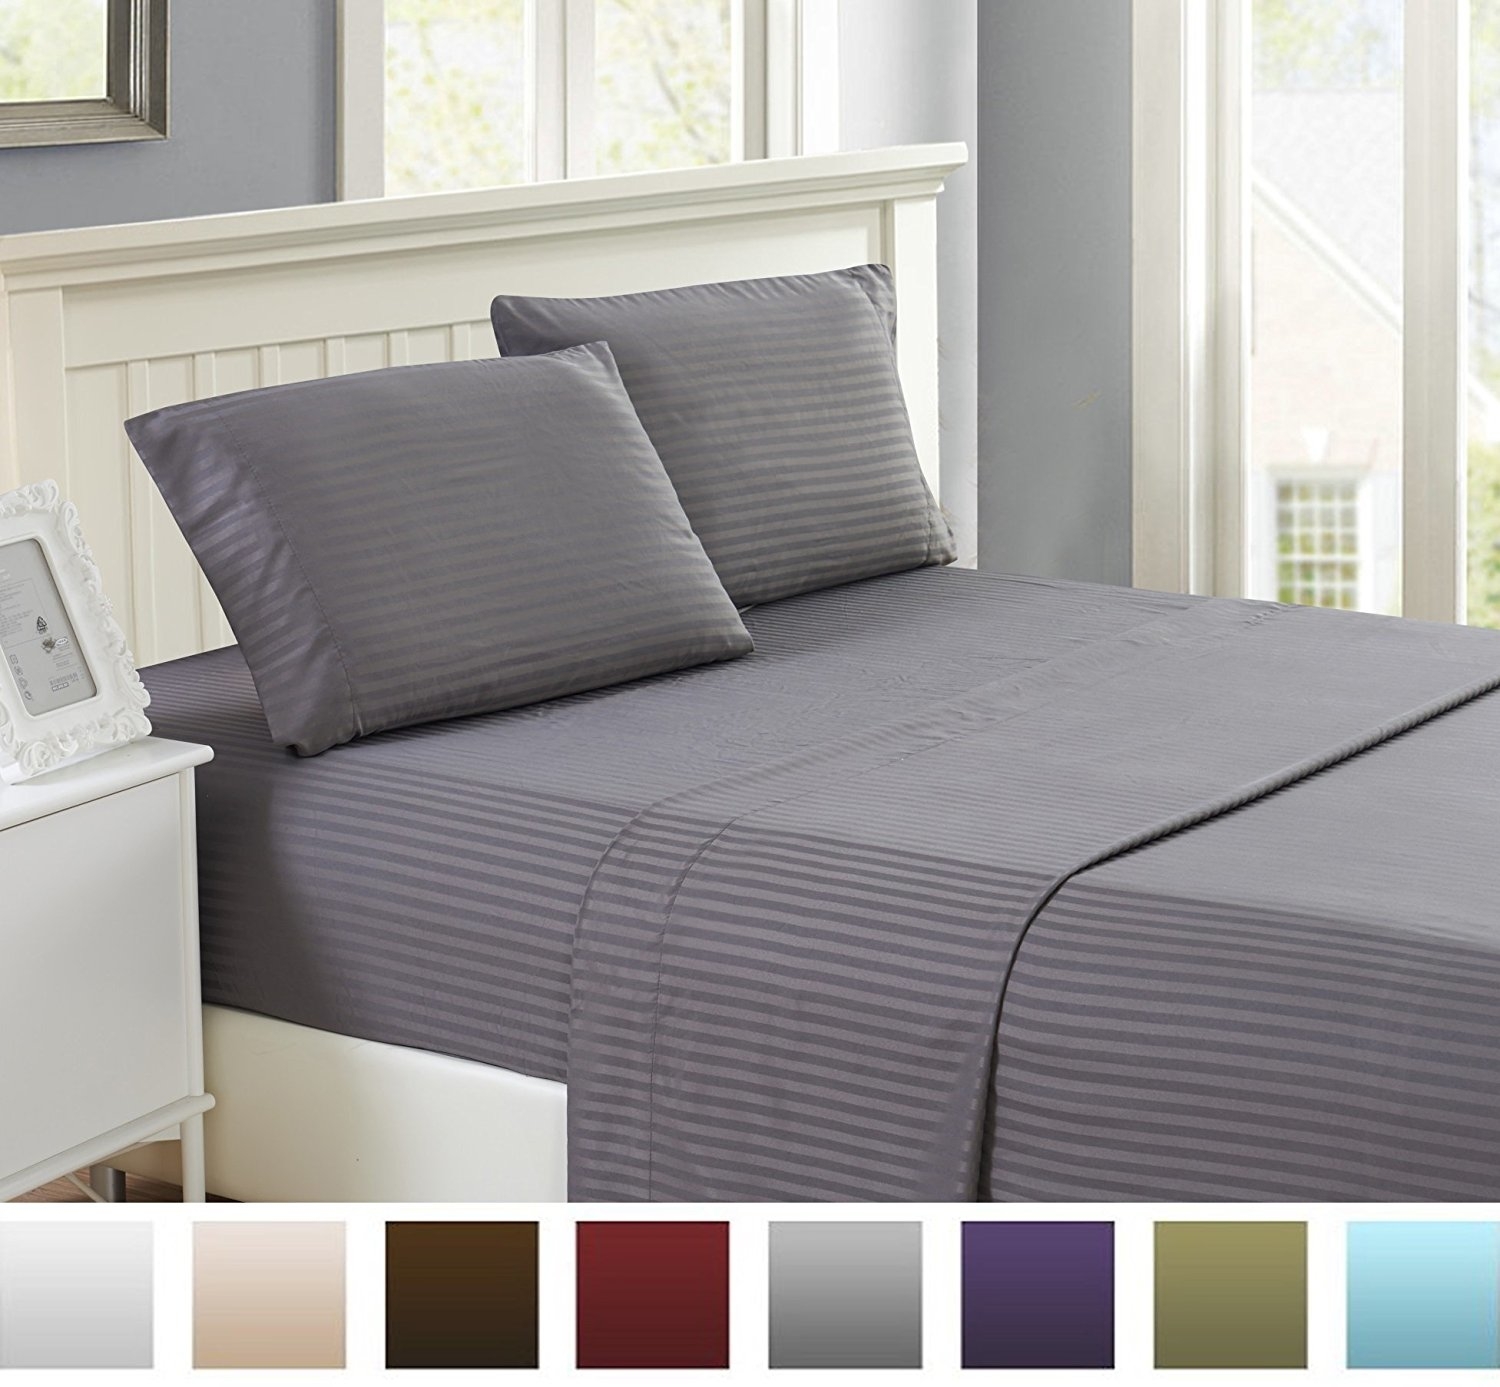 Lux Decor Stripe Bed Sheet Set - Wrinkle, Fade, Stain Resistant - Hypoallergenic - 4 Piece - King, Dark Grey